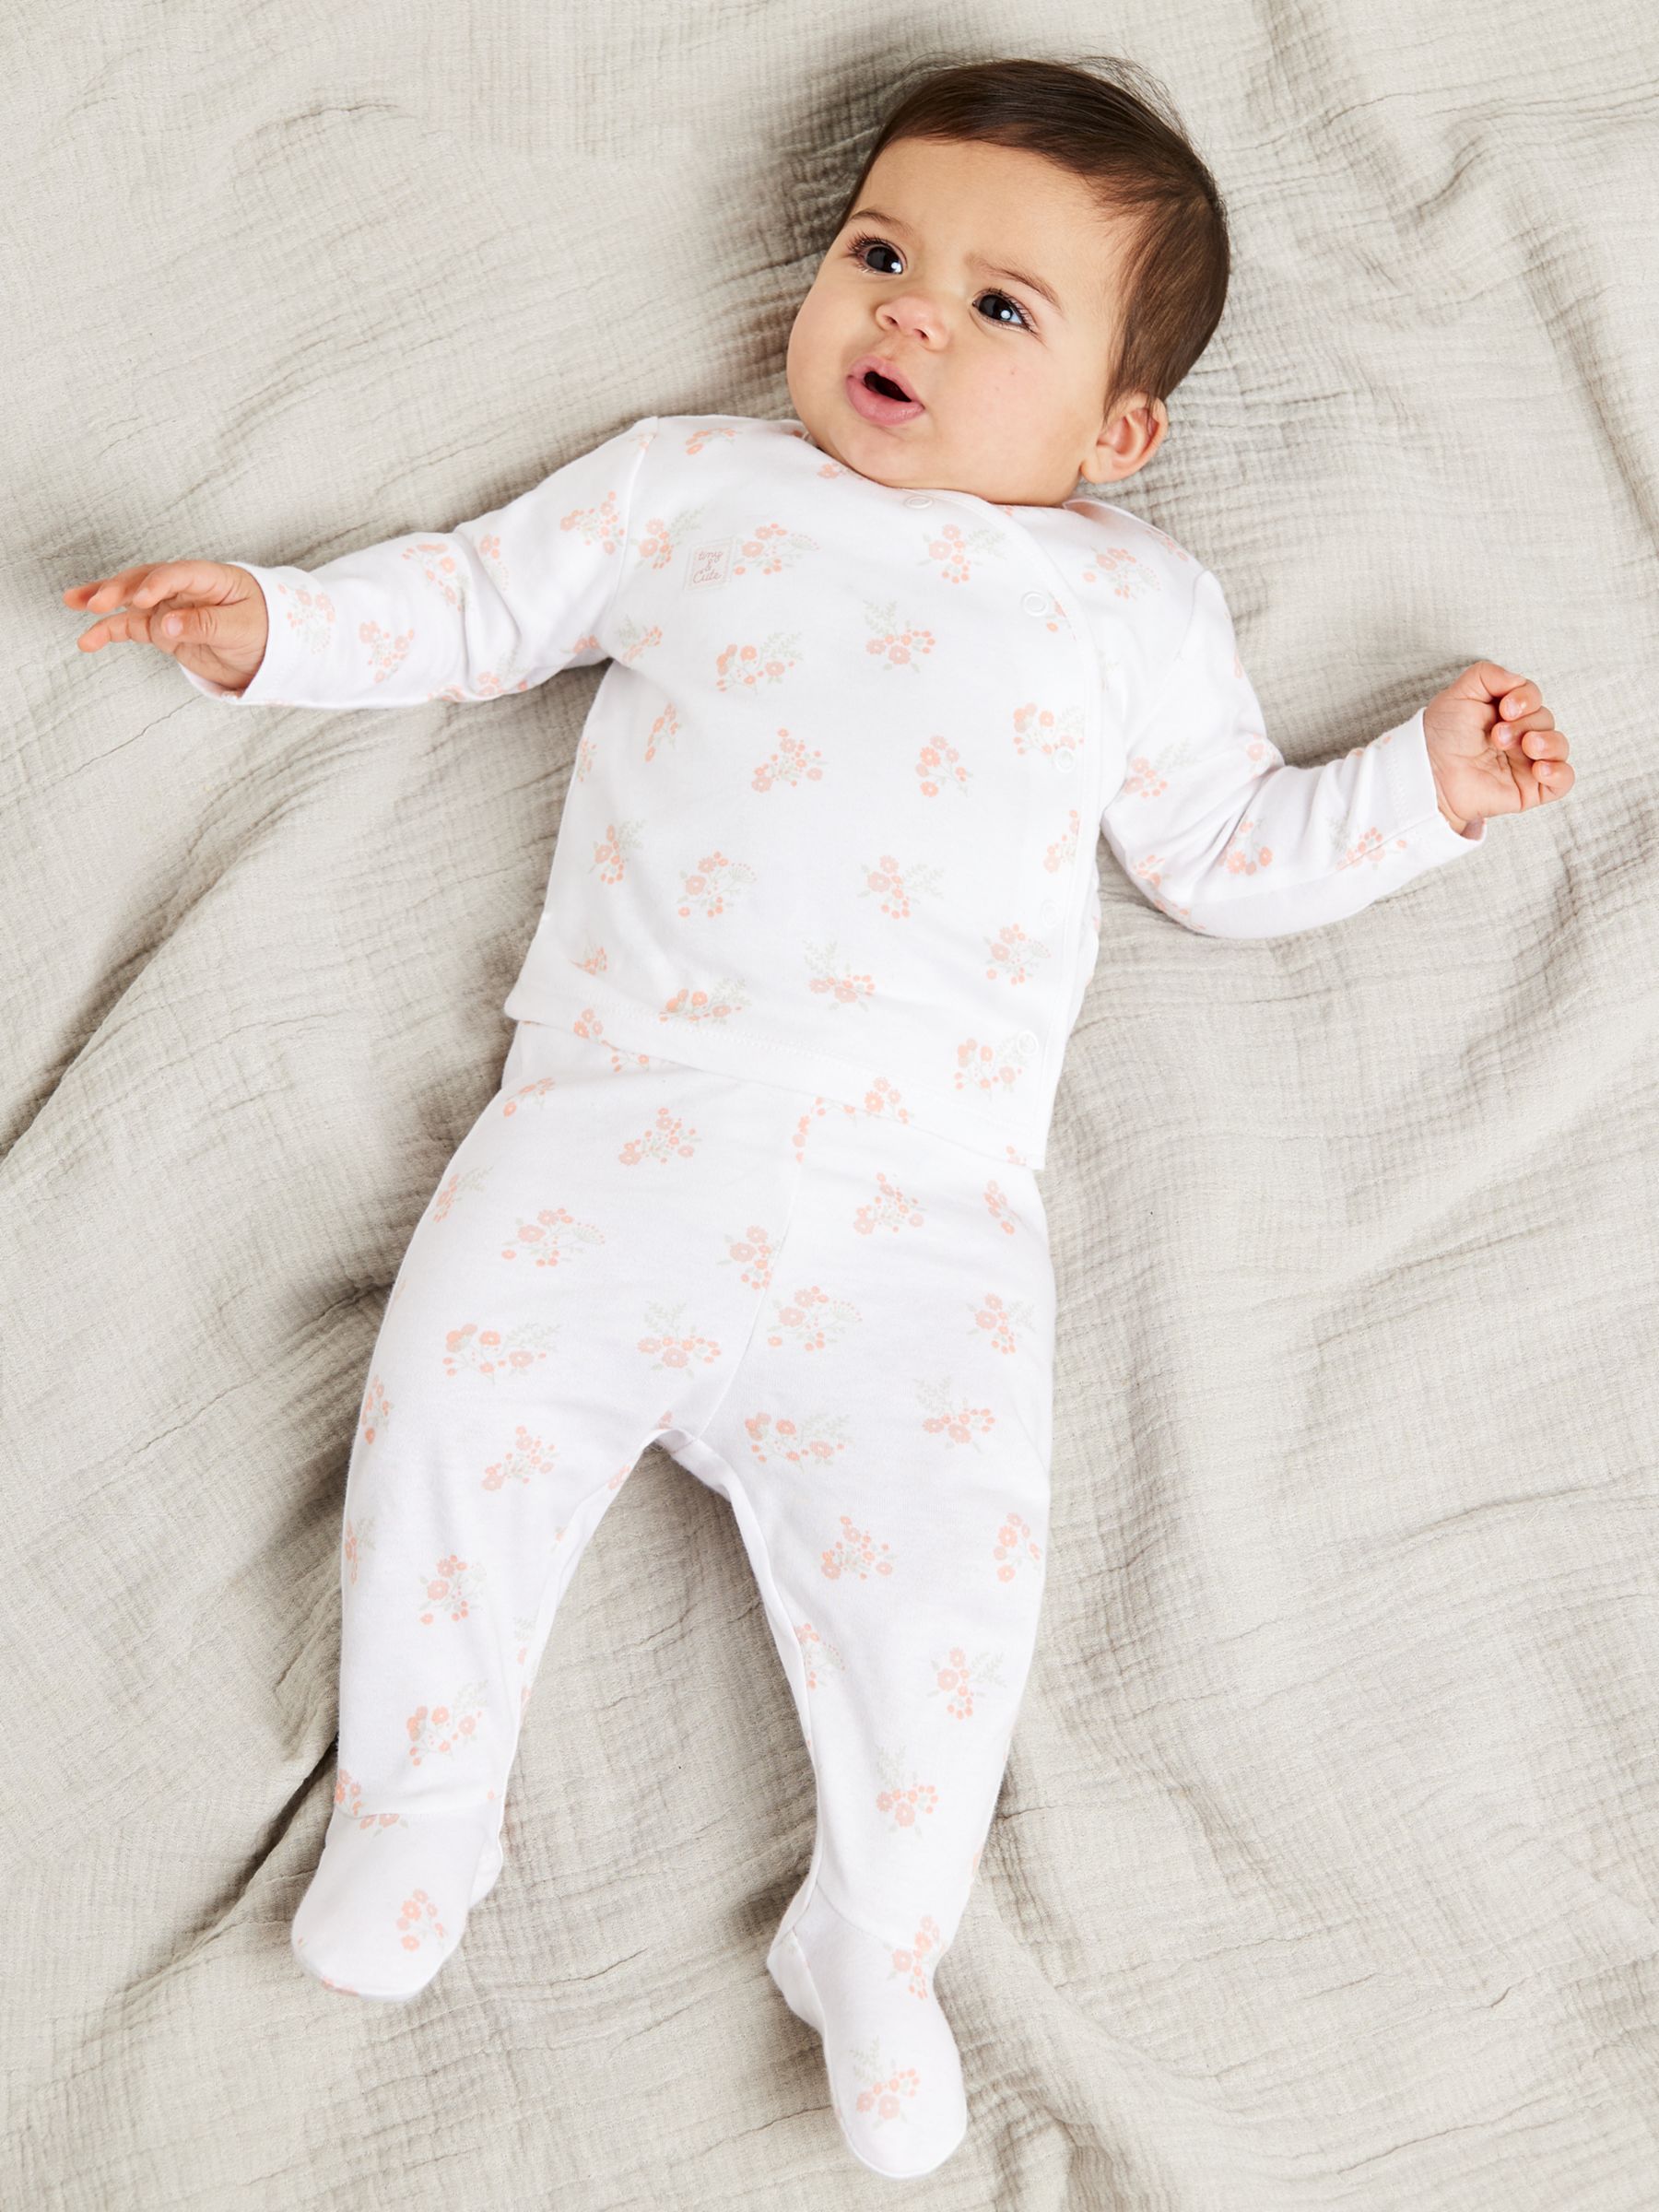 Mini Cuddles Baby Floral Applique Sleepsuits, Hat & Gloves Set, White ...